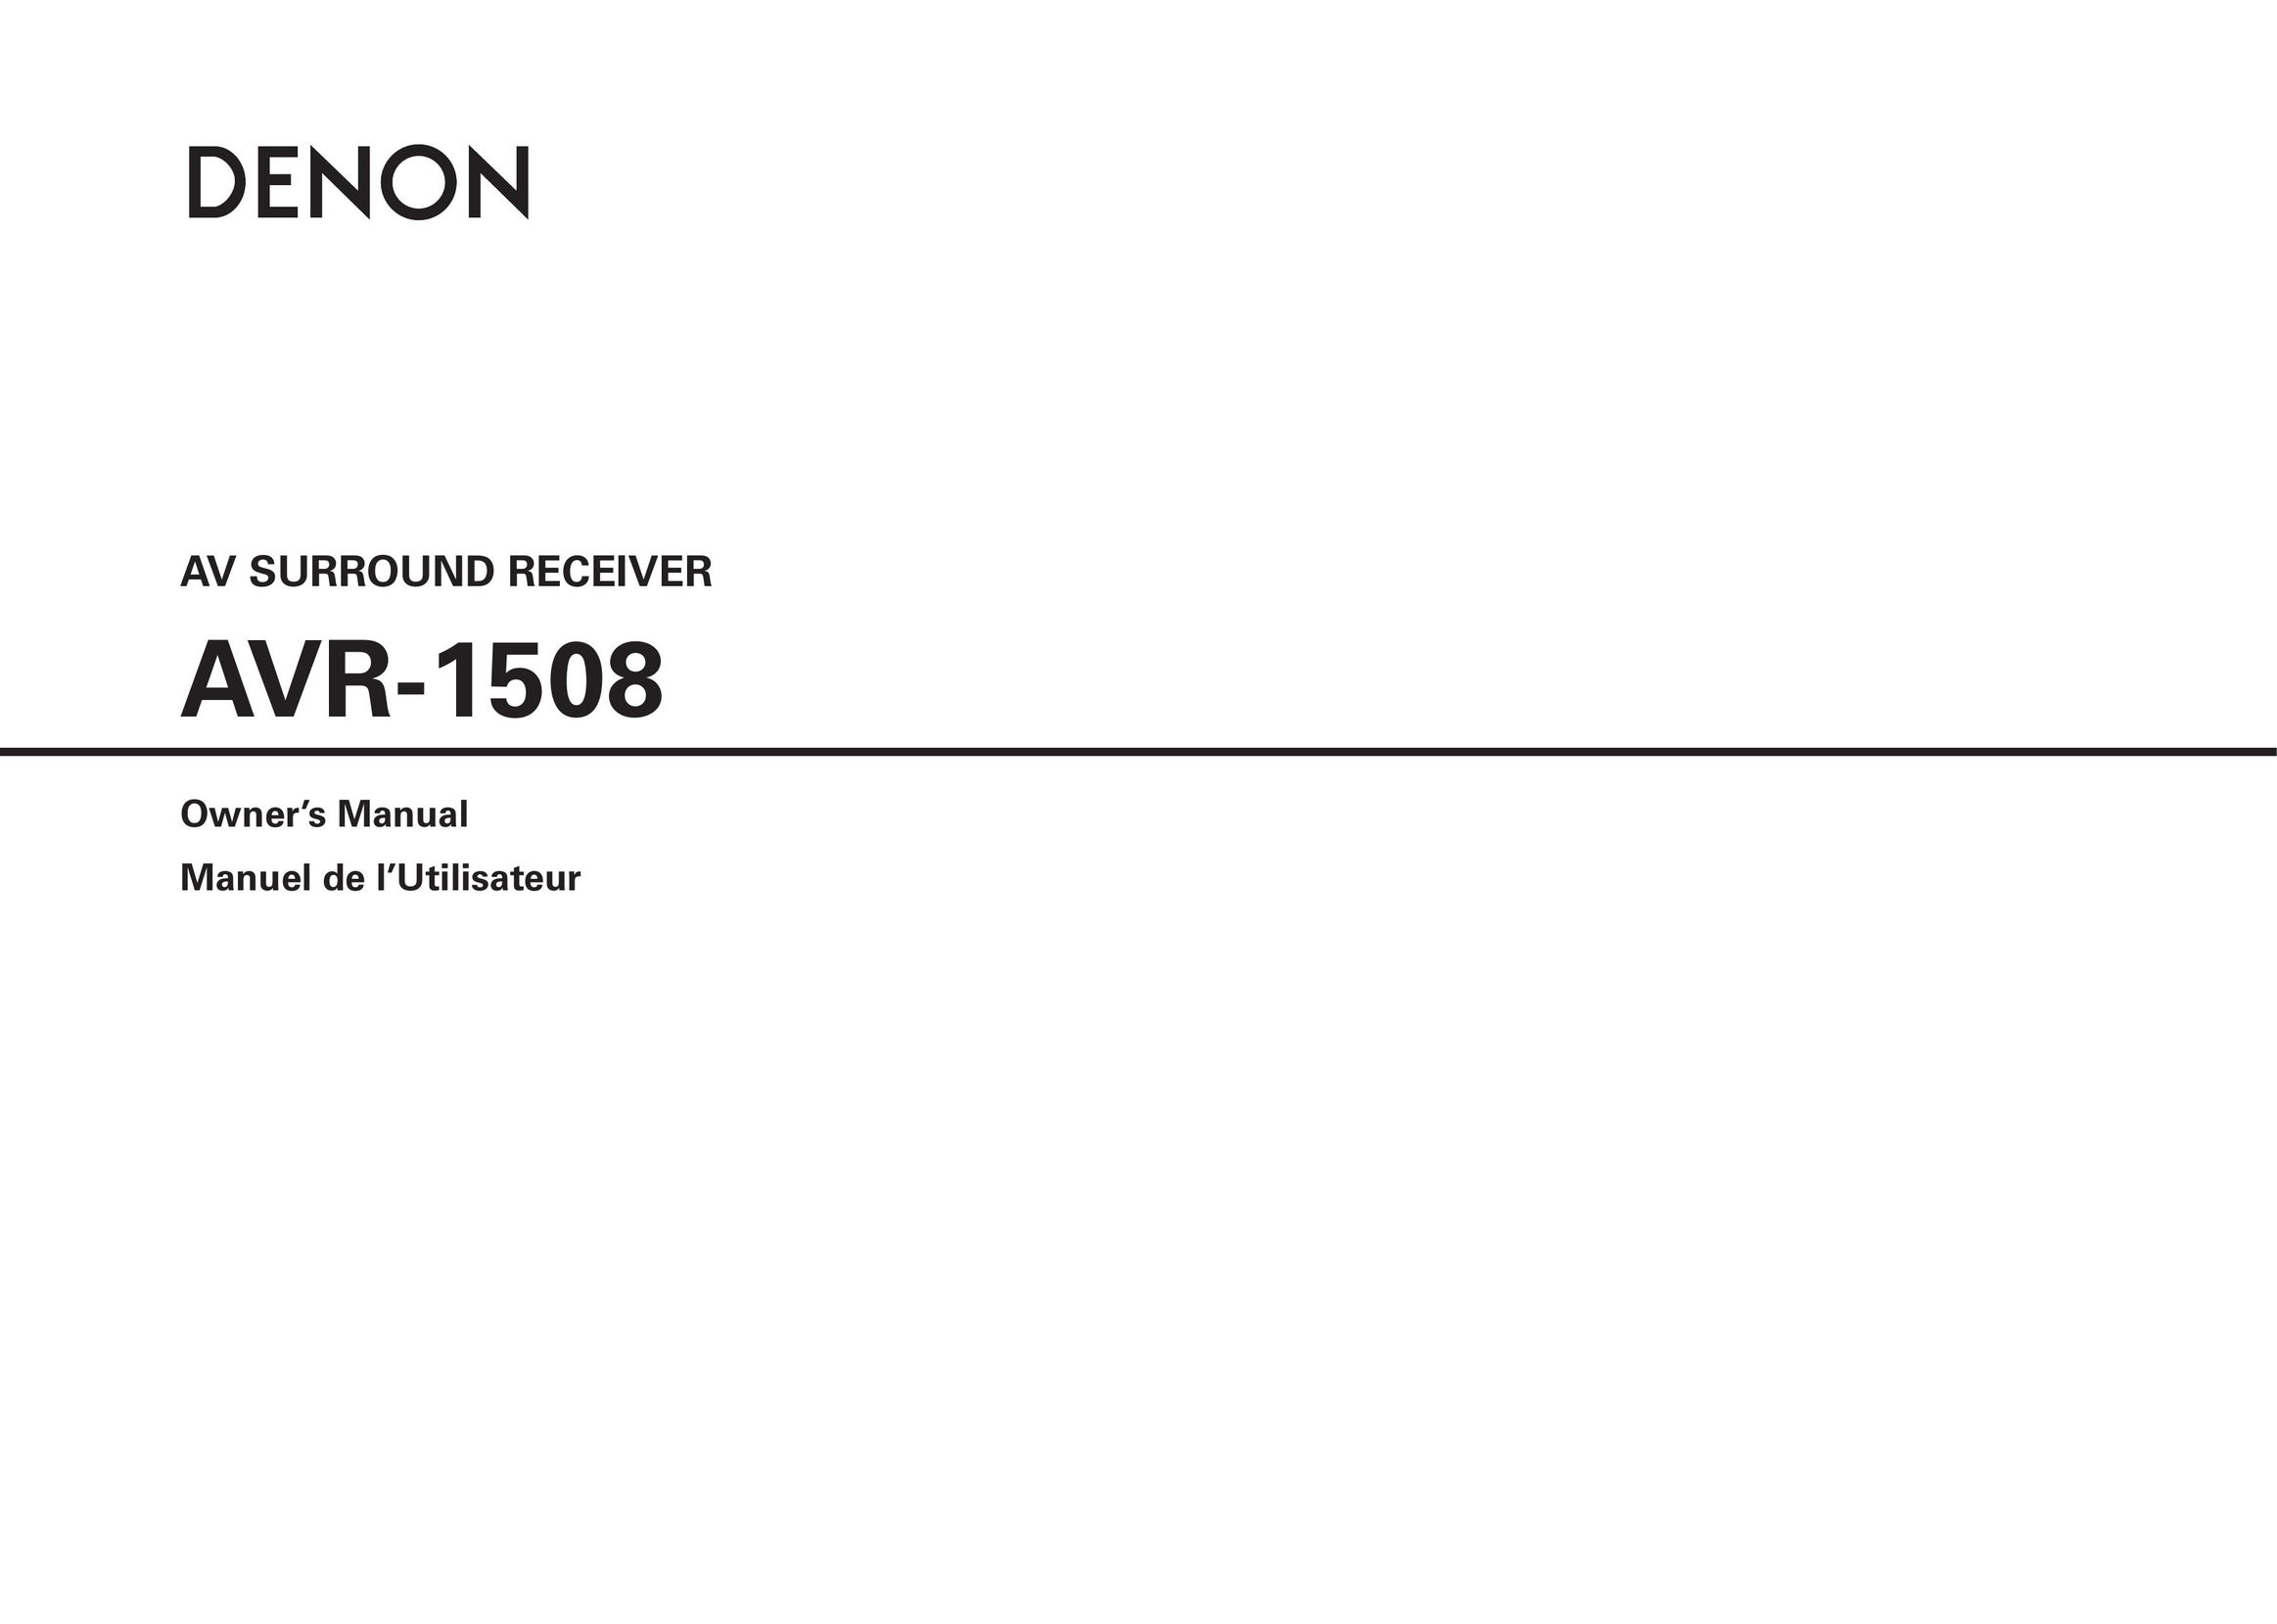 Denon AVR-1508 Stereo Receiver User Manual